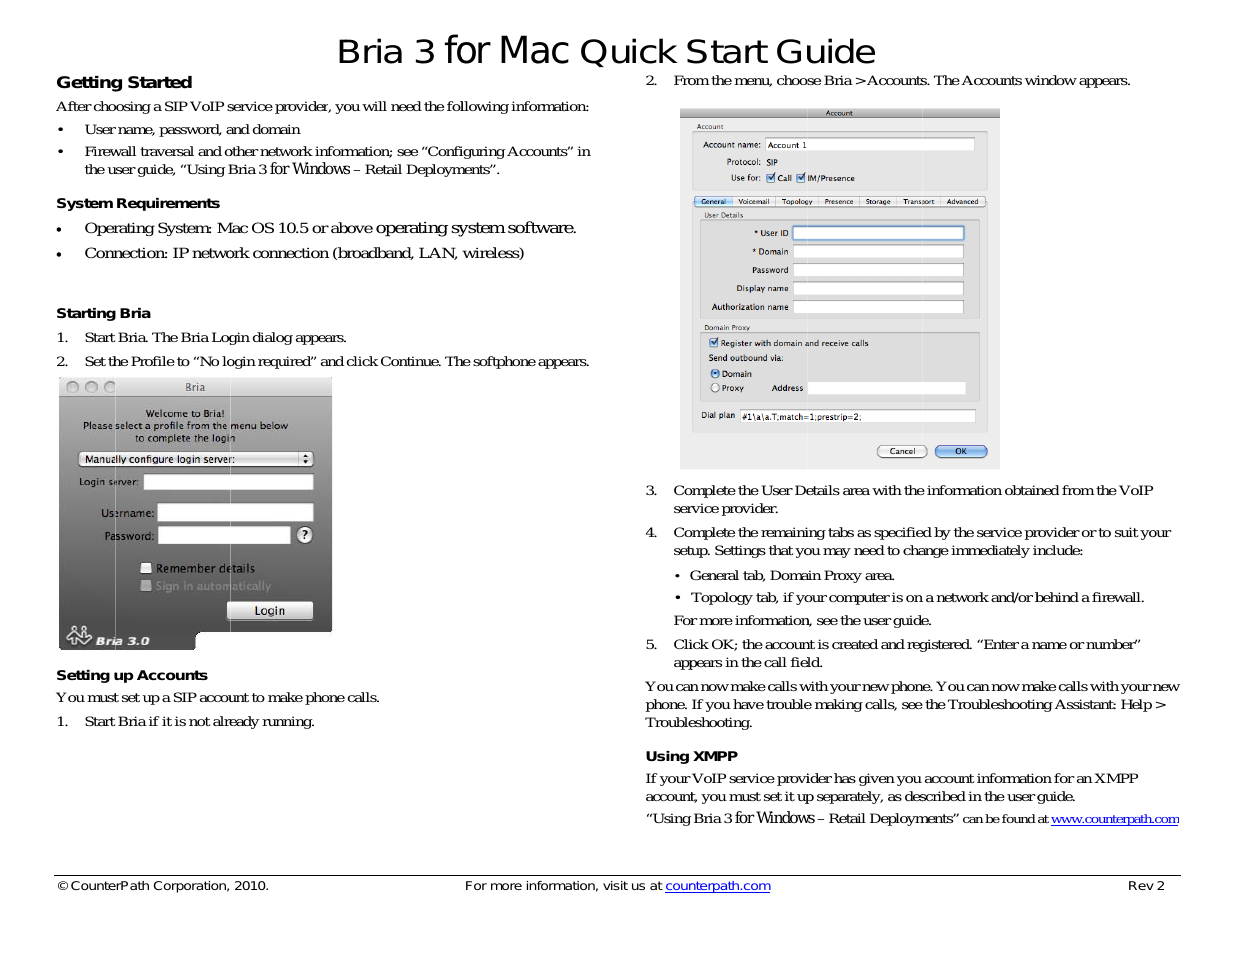 Bria 3.1 for Mac Quick Start Guide